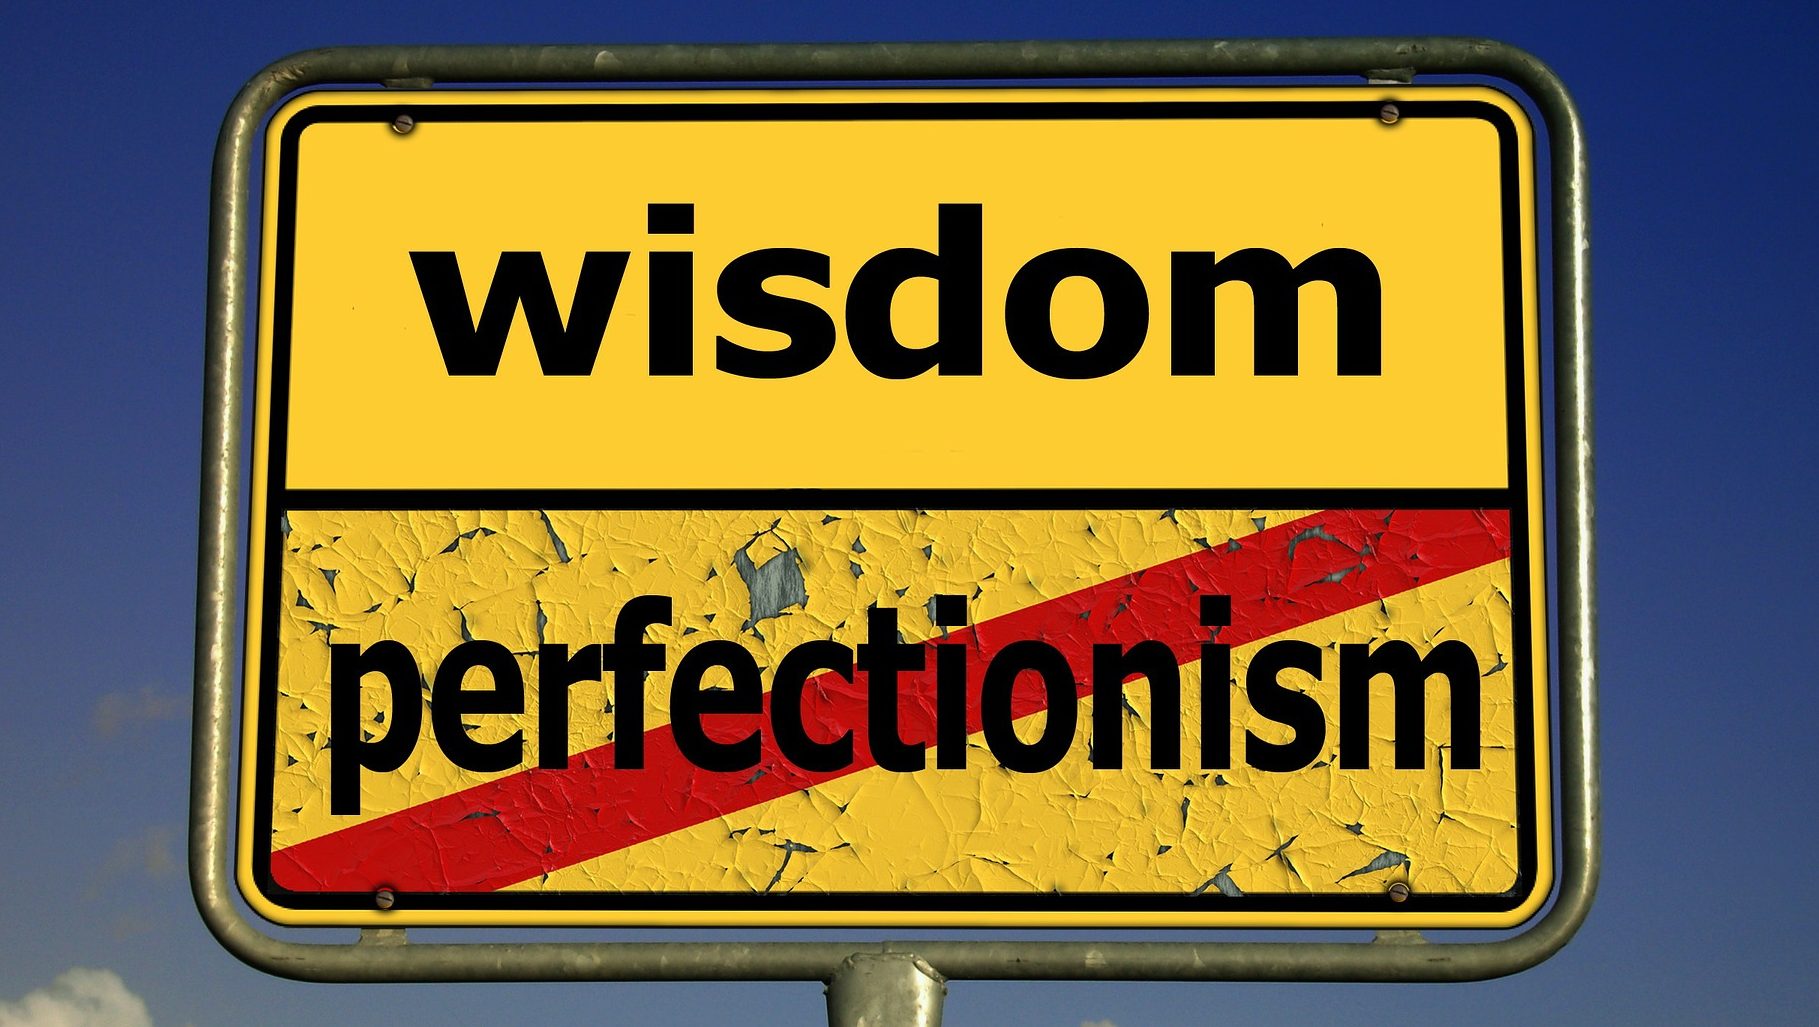 Wisdom or perfectionism